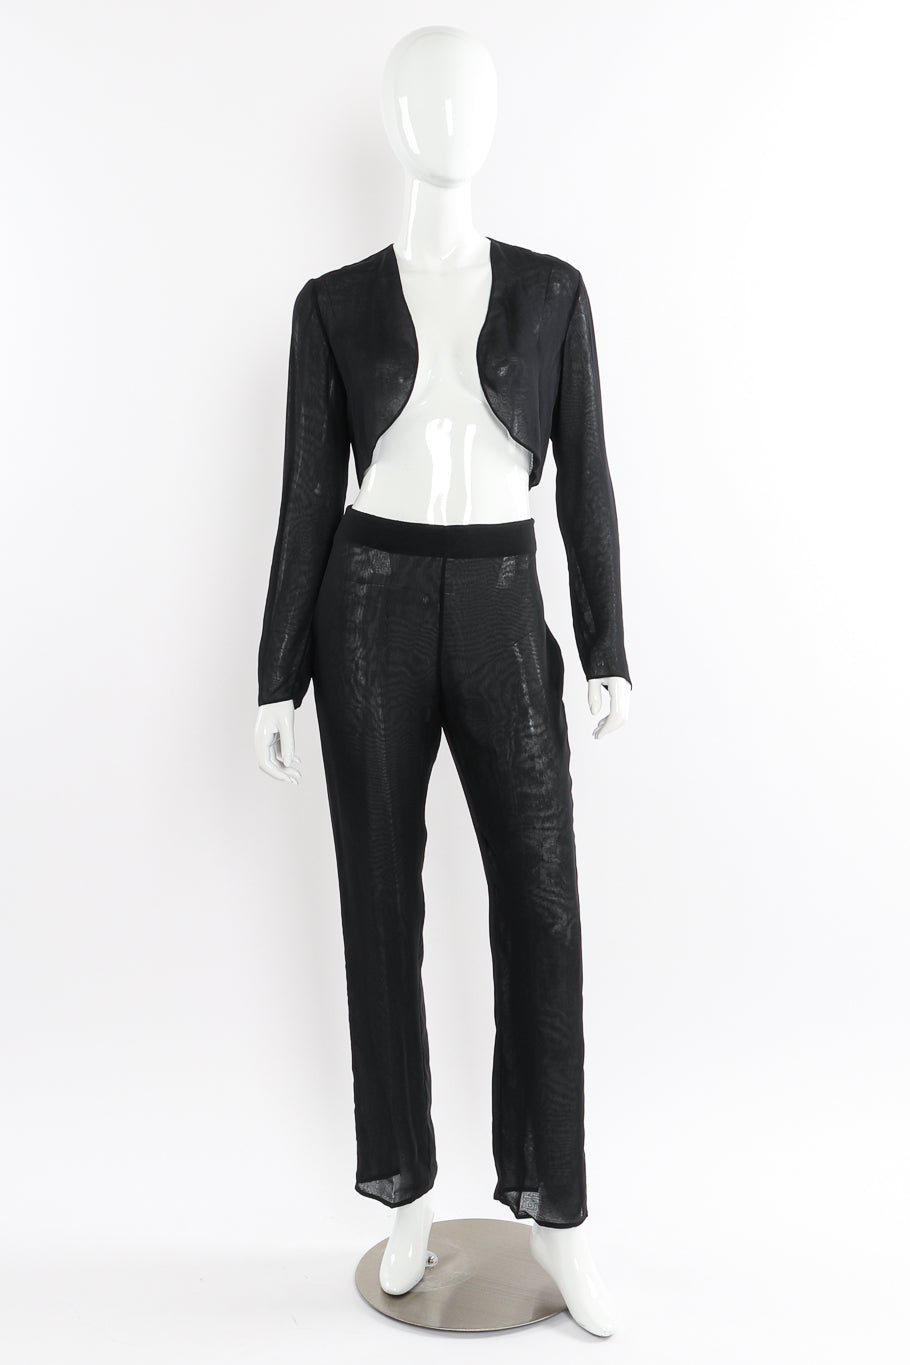 Vintage Richard Tyler Silk Bolero Top and Pants Set front view on mannequin @Recessla